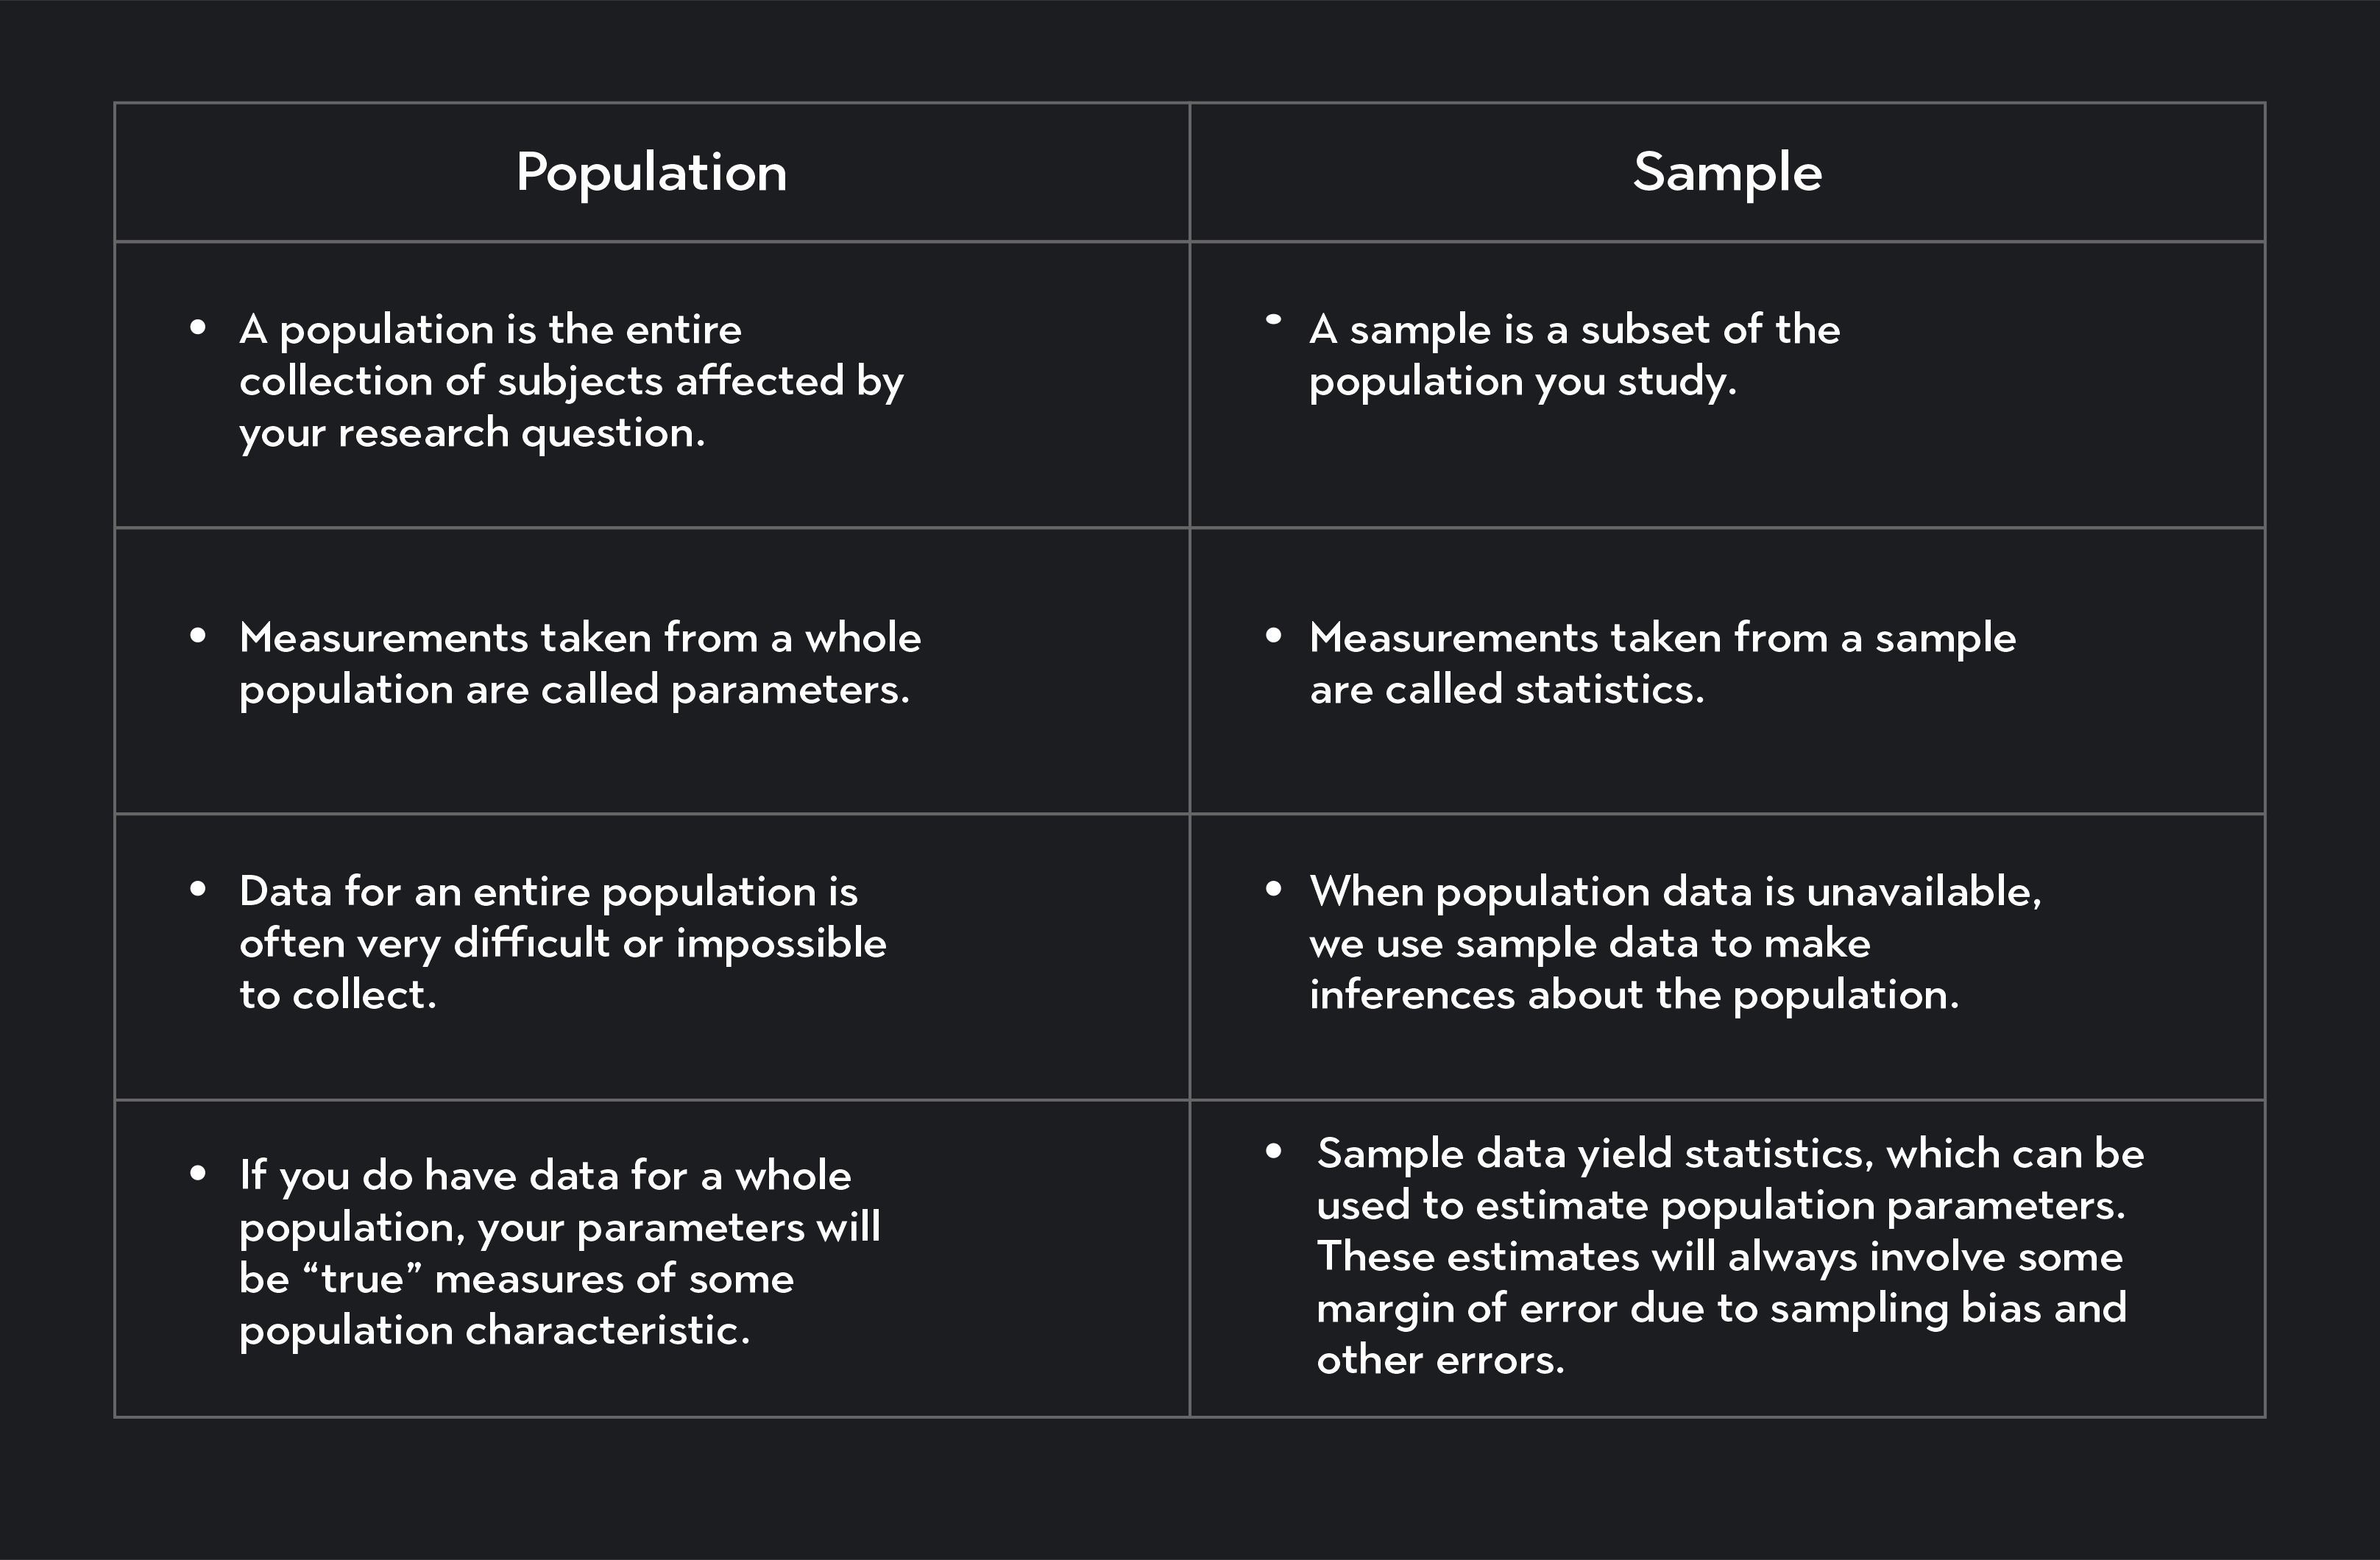 Population vs. Sample Table